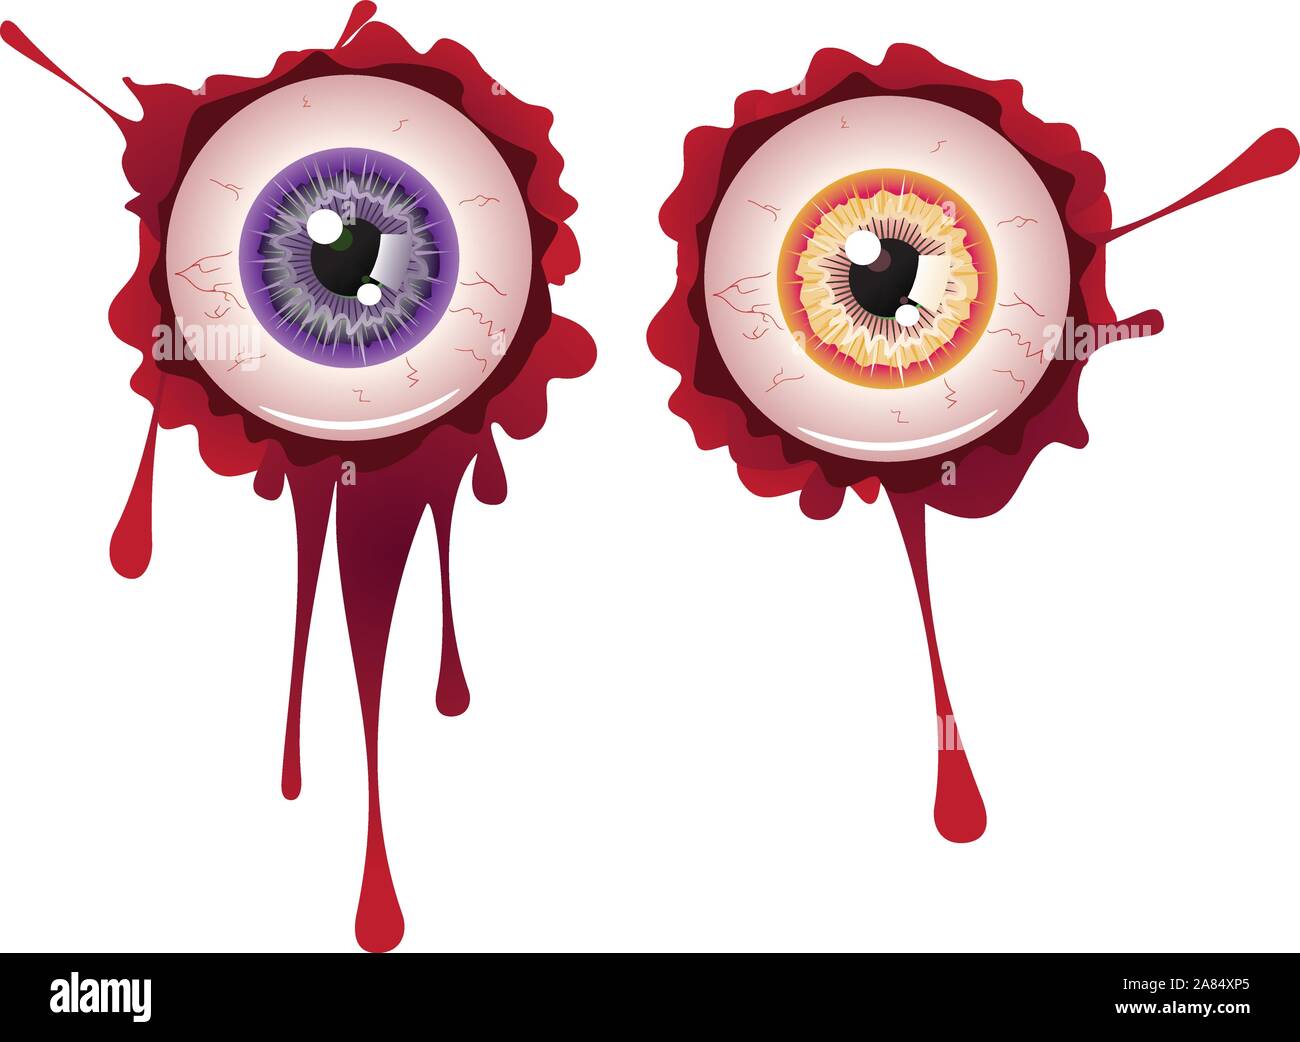 7. "Spooky Halloween Nail Art: Eyeball and Blood Splatter" - wide 1